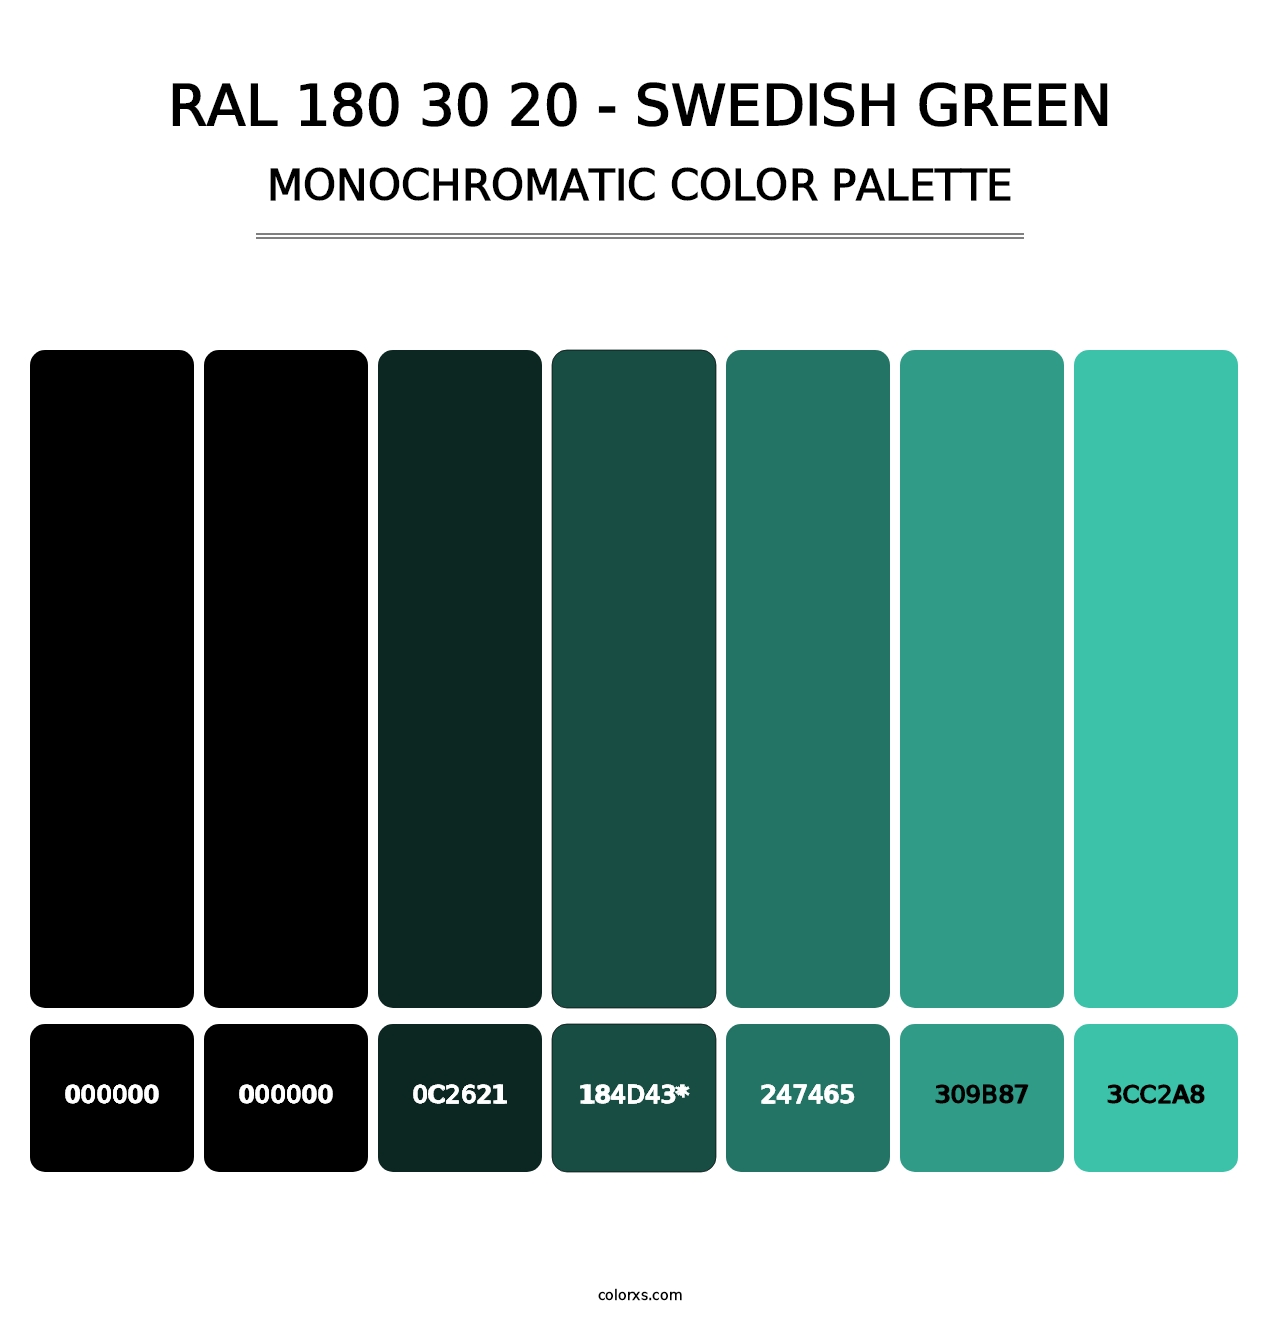 RAL 180 30 20 - Swedish Green - Monochromatic Color Palette